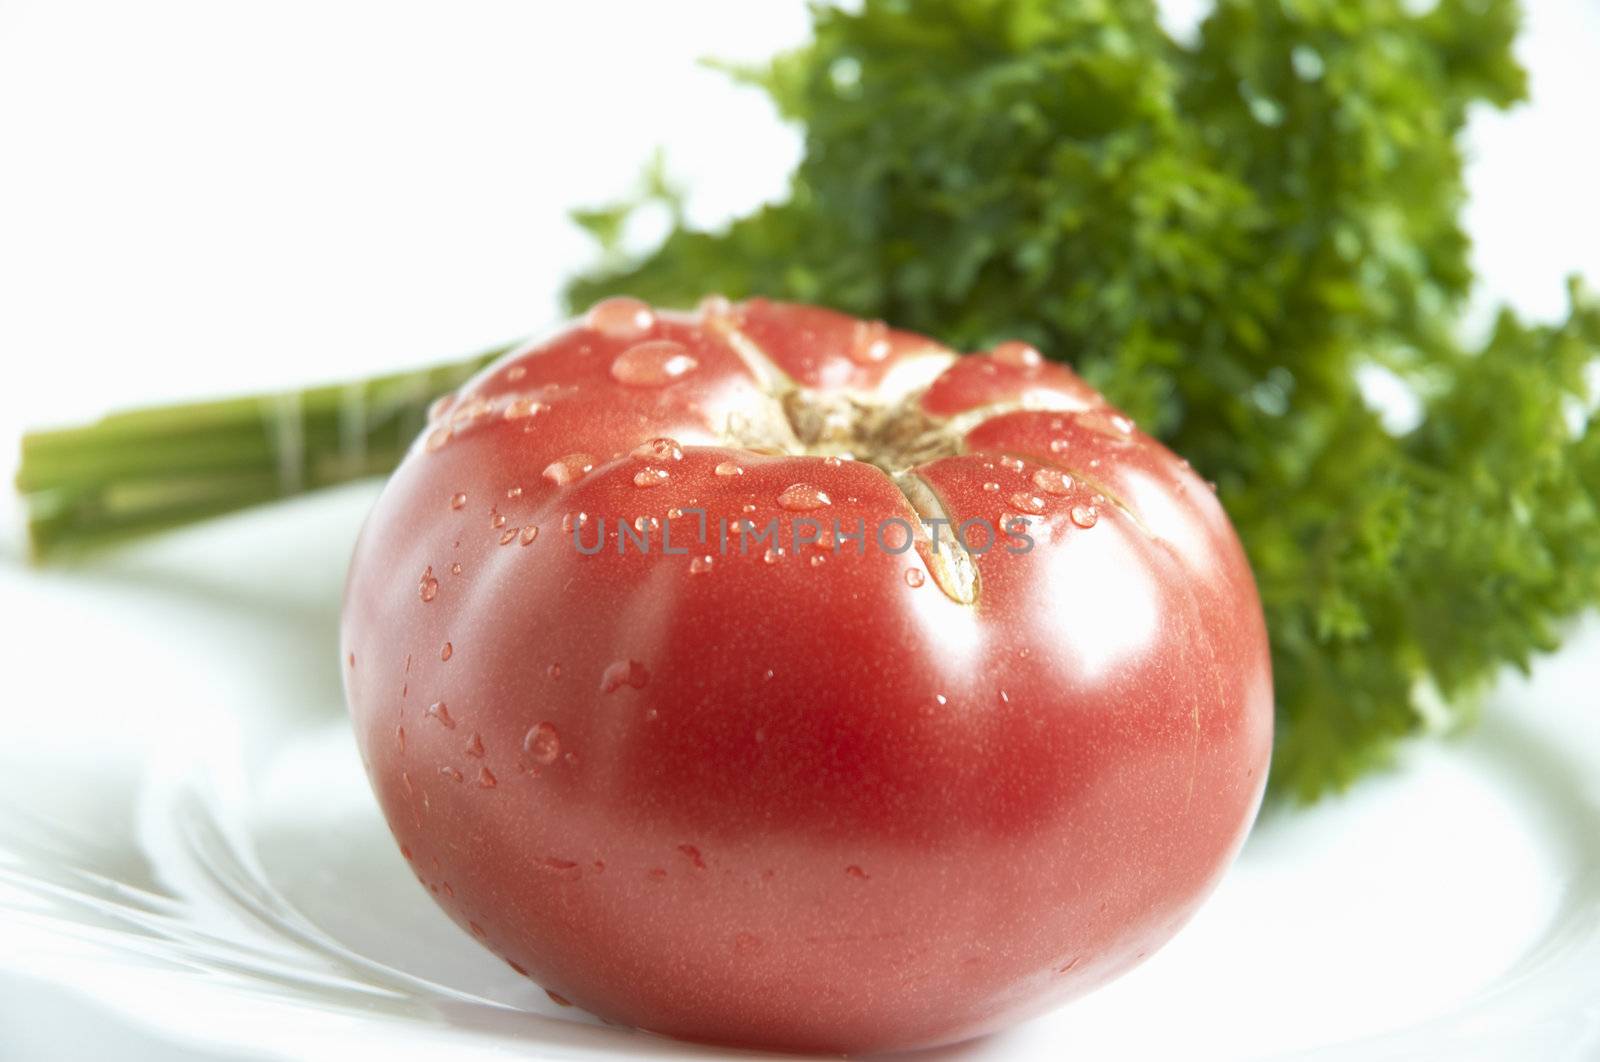 tomato and greens by Kuzma